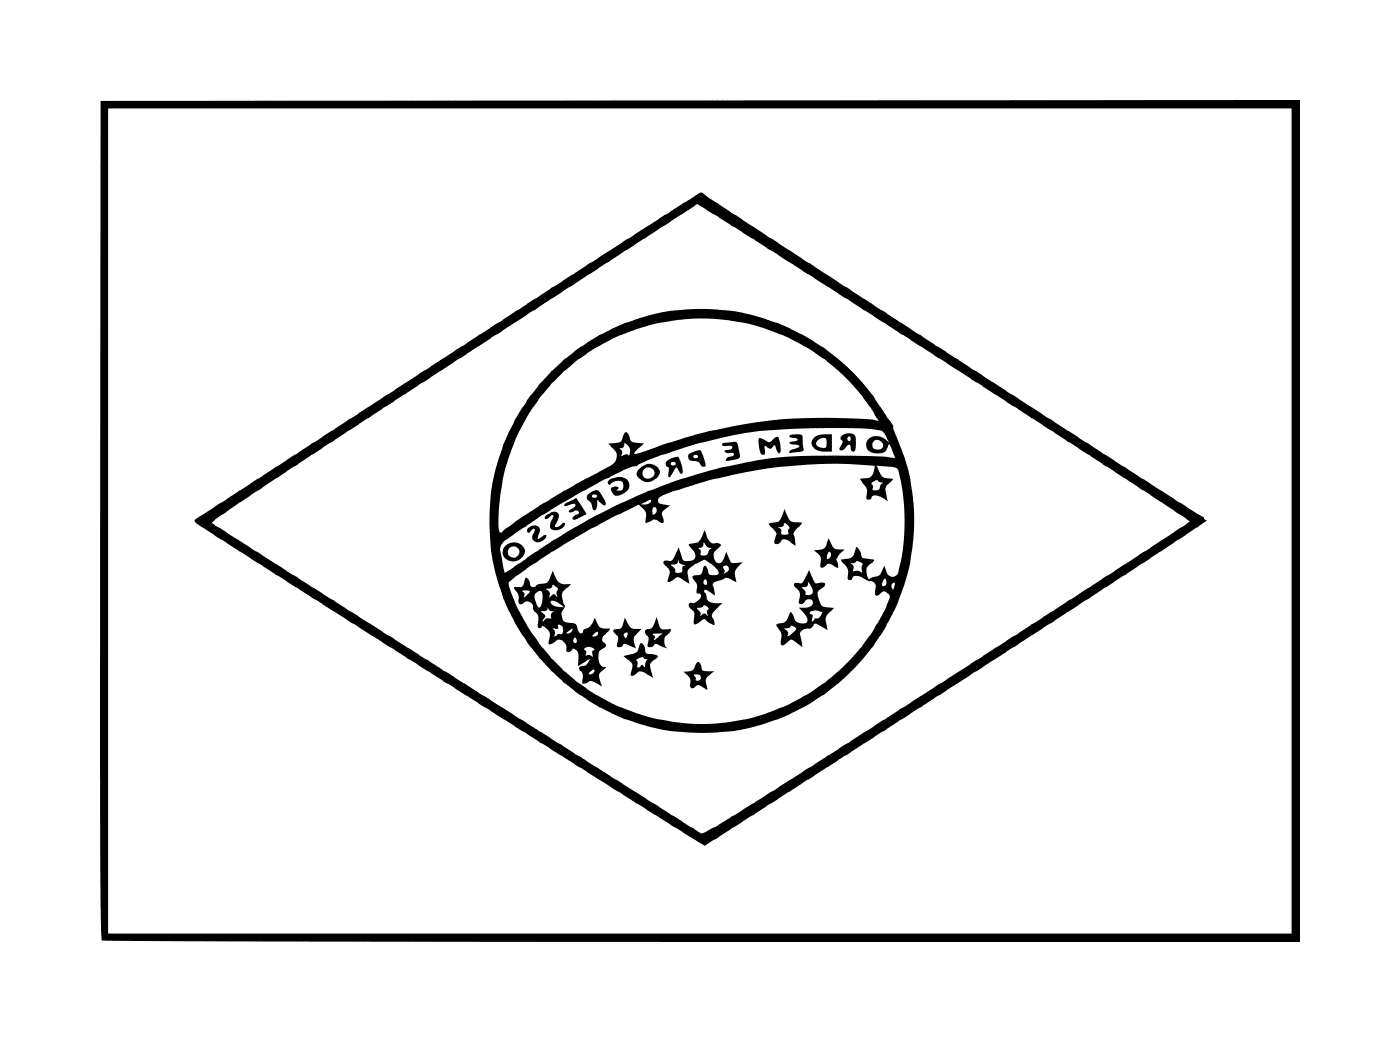  Bandera de Brasil 